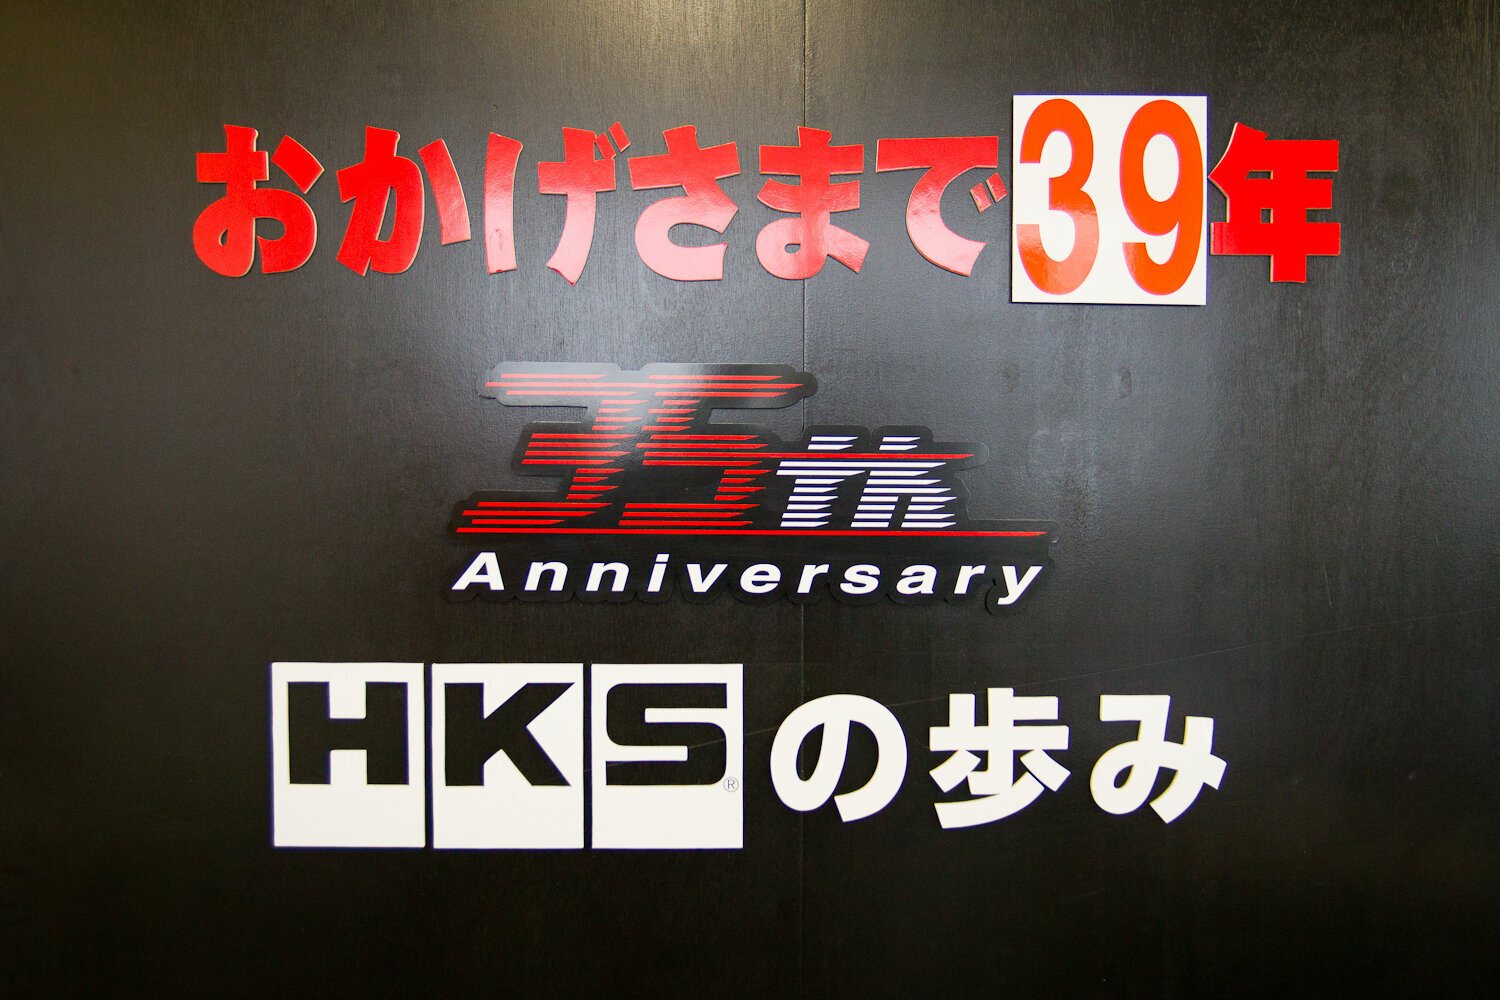 HKS Limited Edition 30th Anniversary Öldeckel